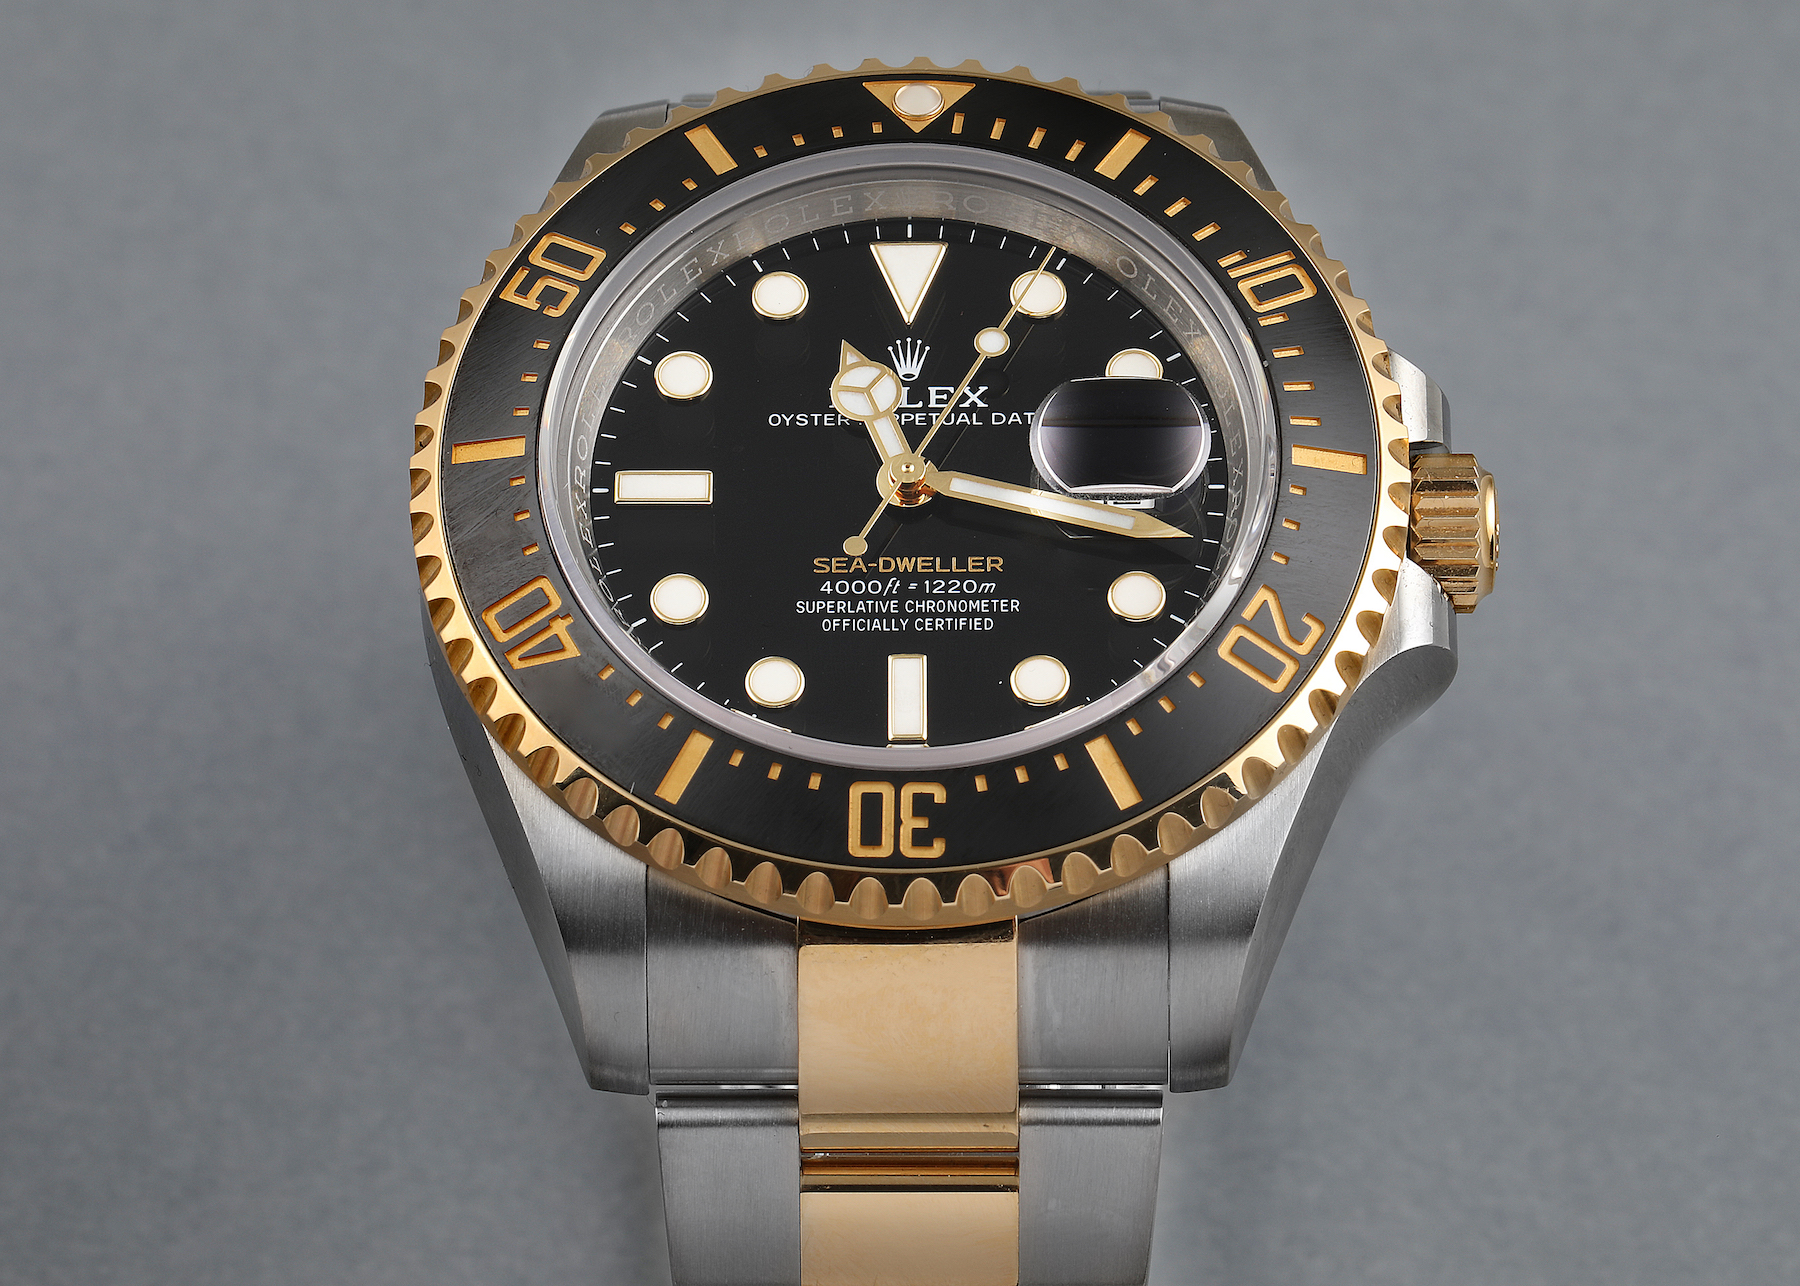 Rolex Seadweller Black Dial Steel Yellow Gold Mens Watch 126603